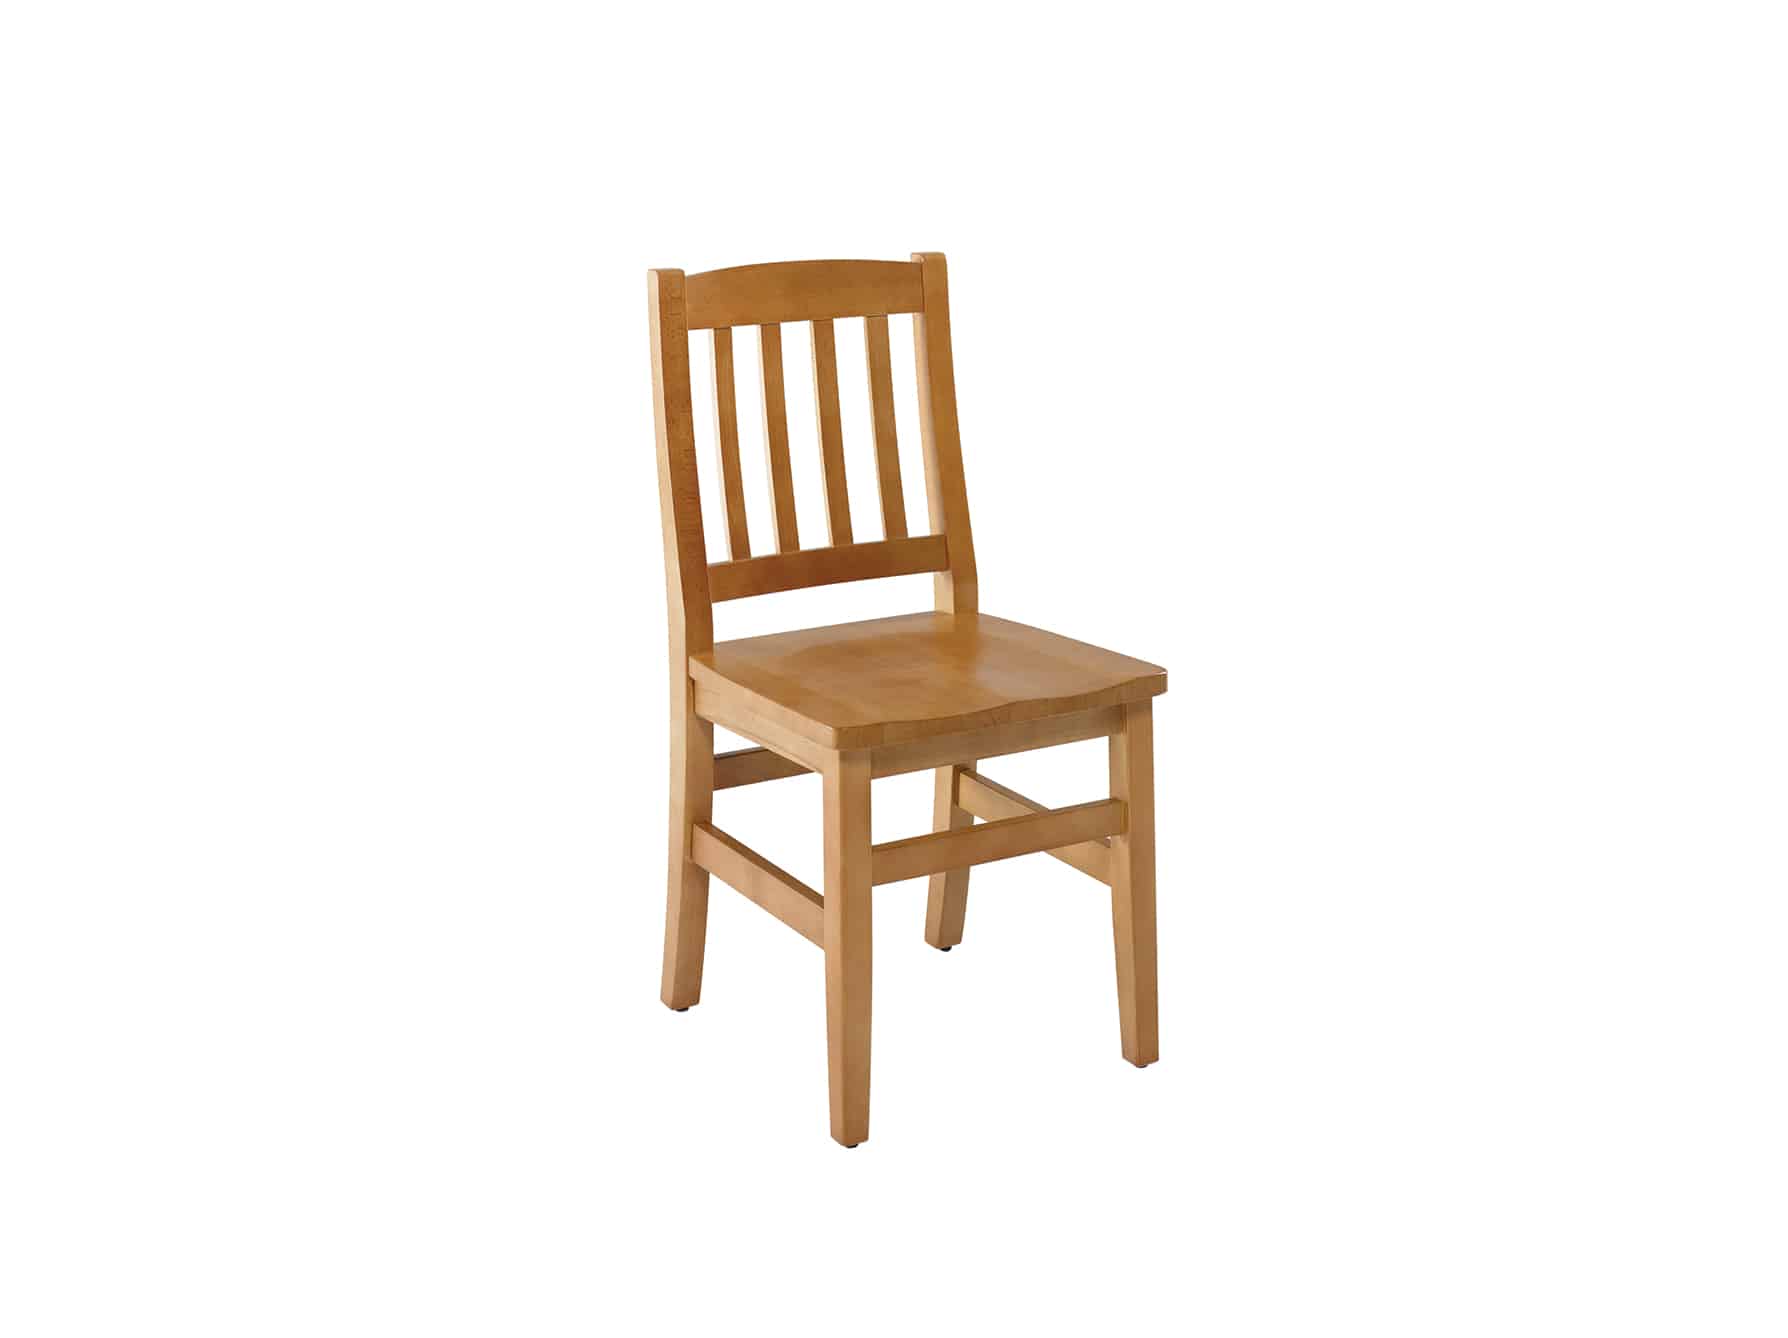 Dalton Side Chair, in All Wood